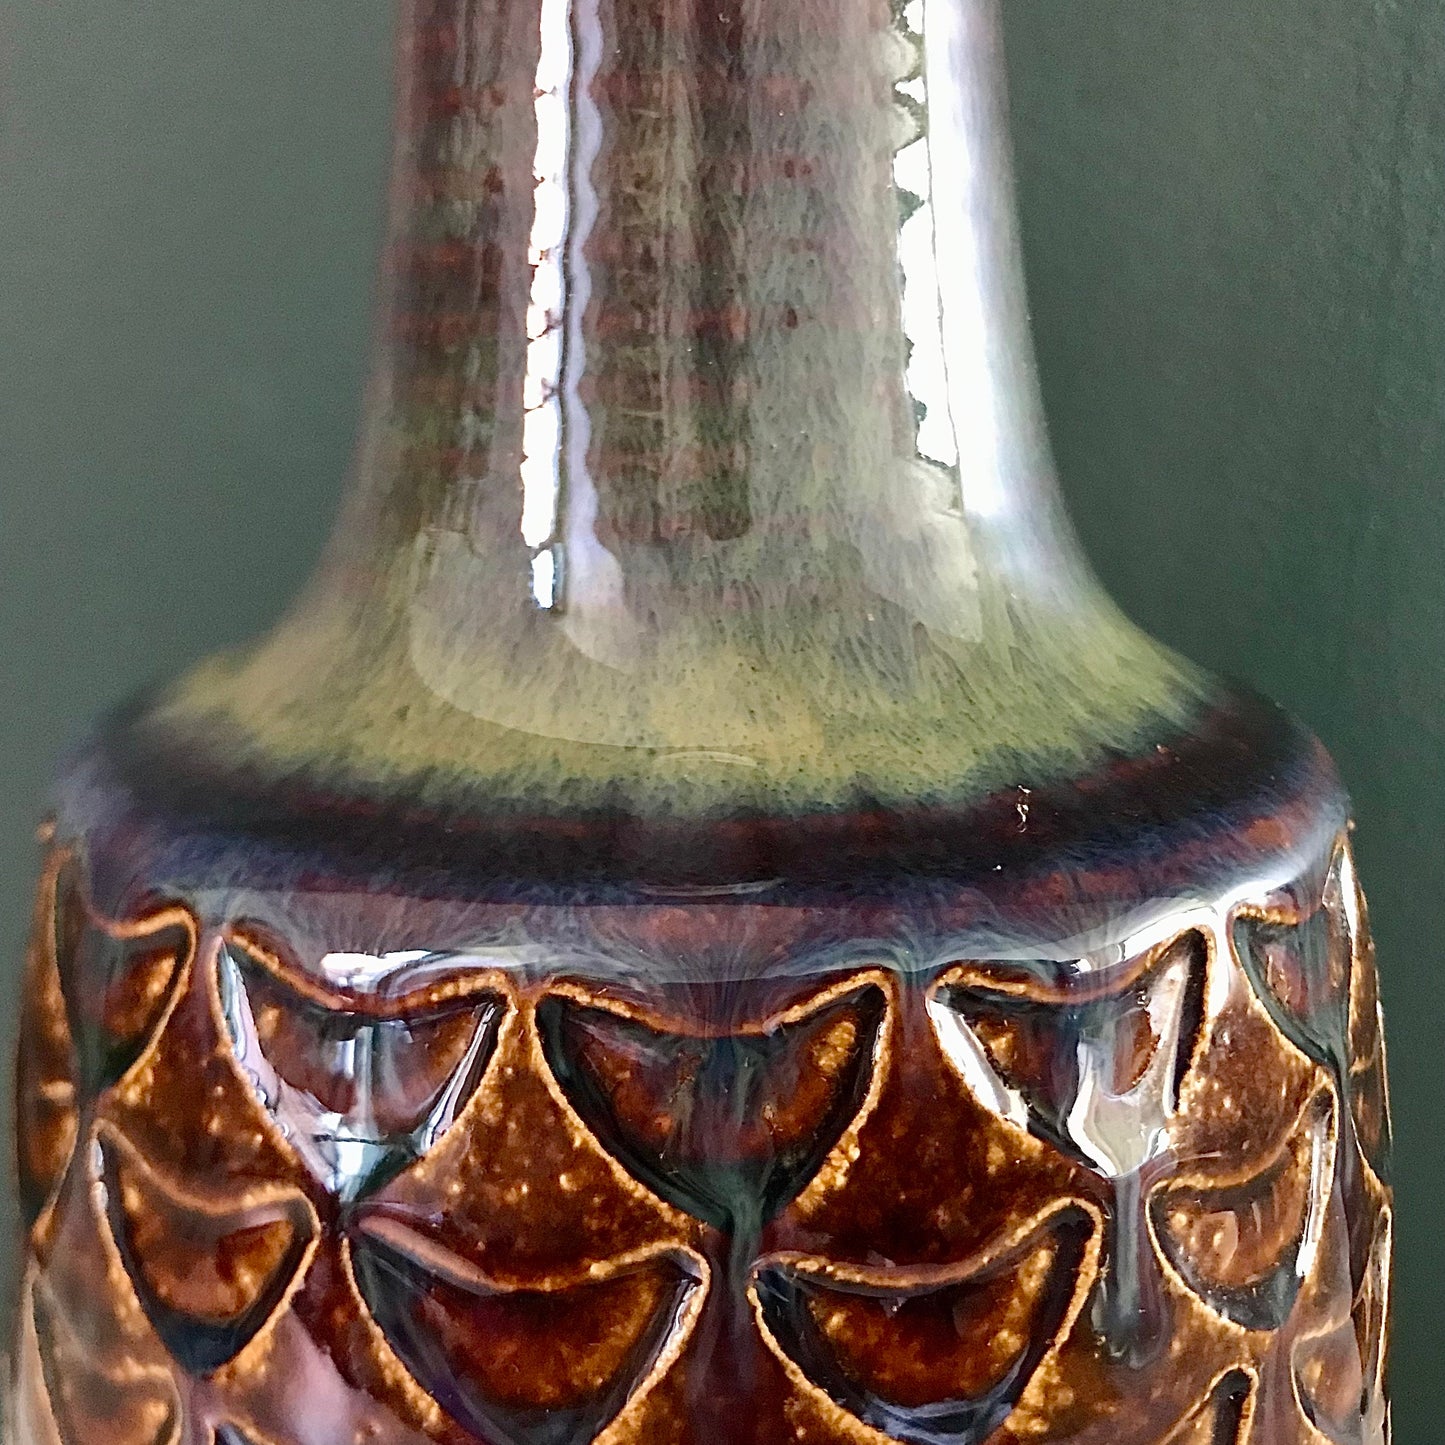 Soholm Pottery Danish Ceramic Table Lamp Pineapple Scandi Design 3001